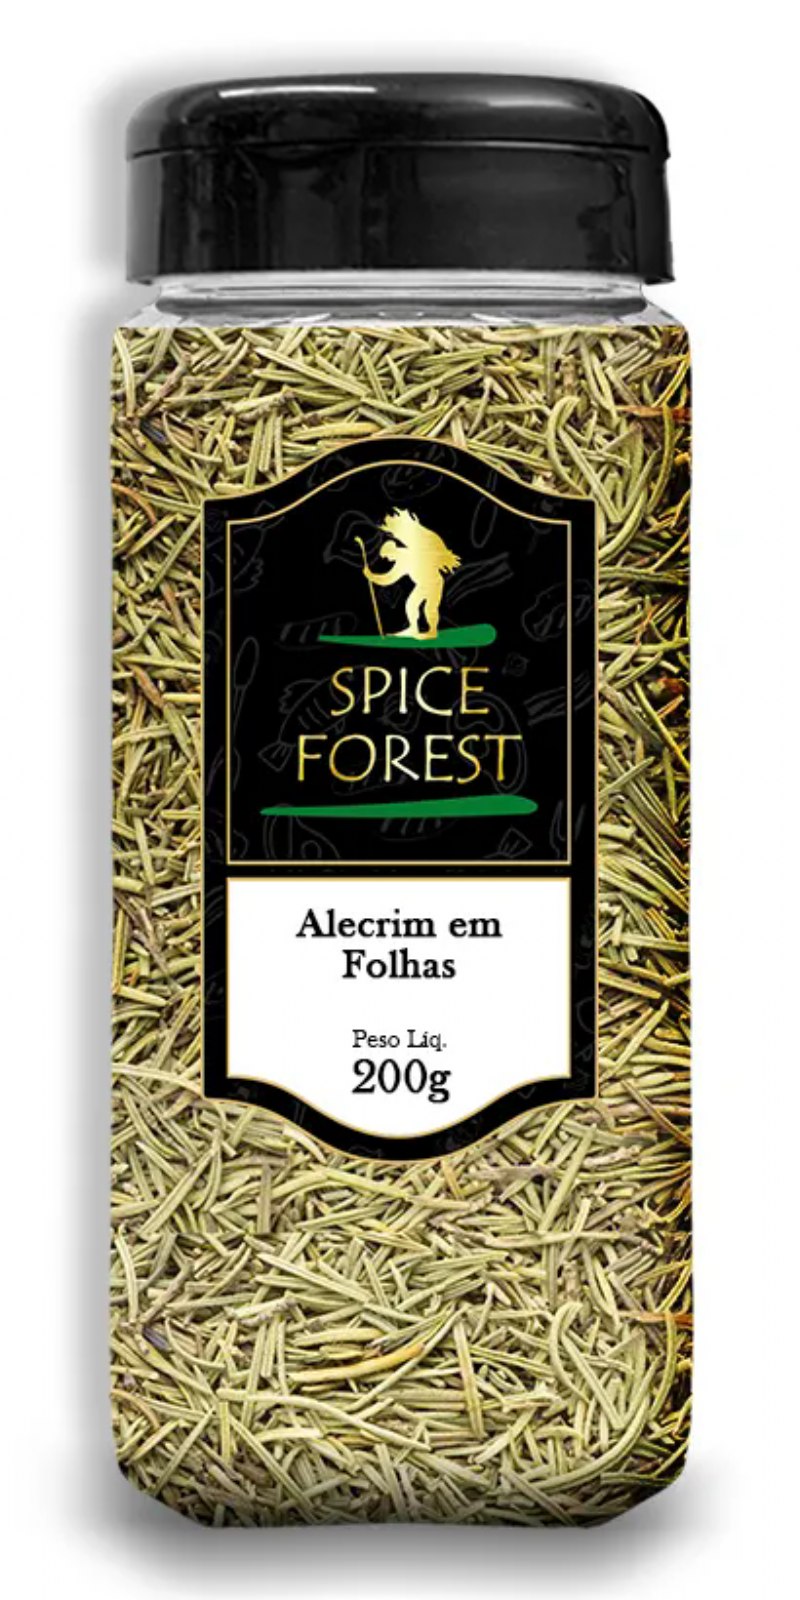 Alecrim em Folhas 200g - Sem Glten - Spice Forest